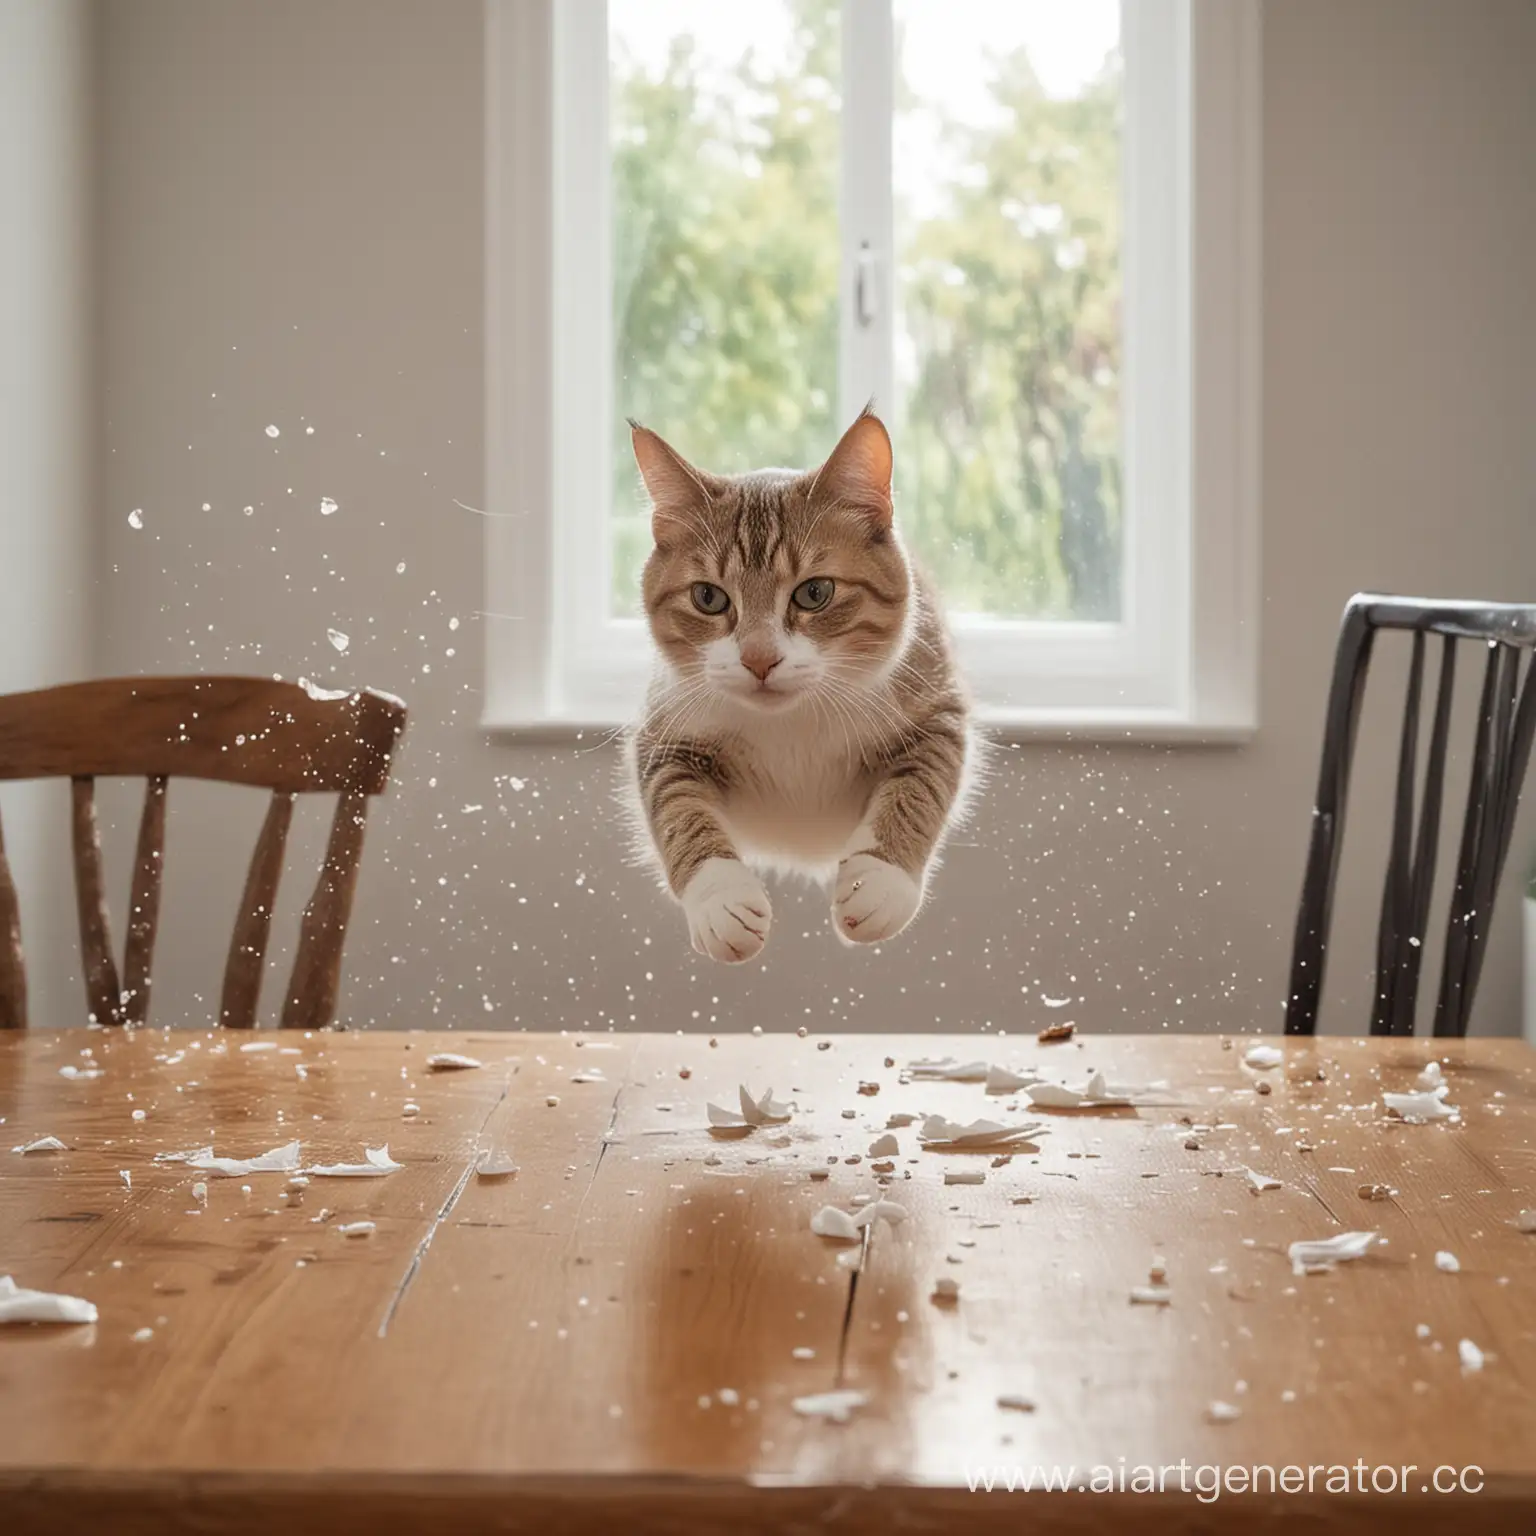 Cat-Falling-Off-Table-Hilarious-Feline-Mishap-Captured